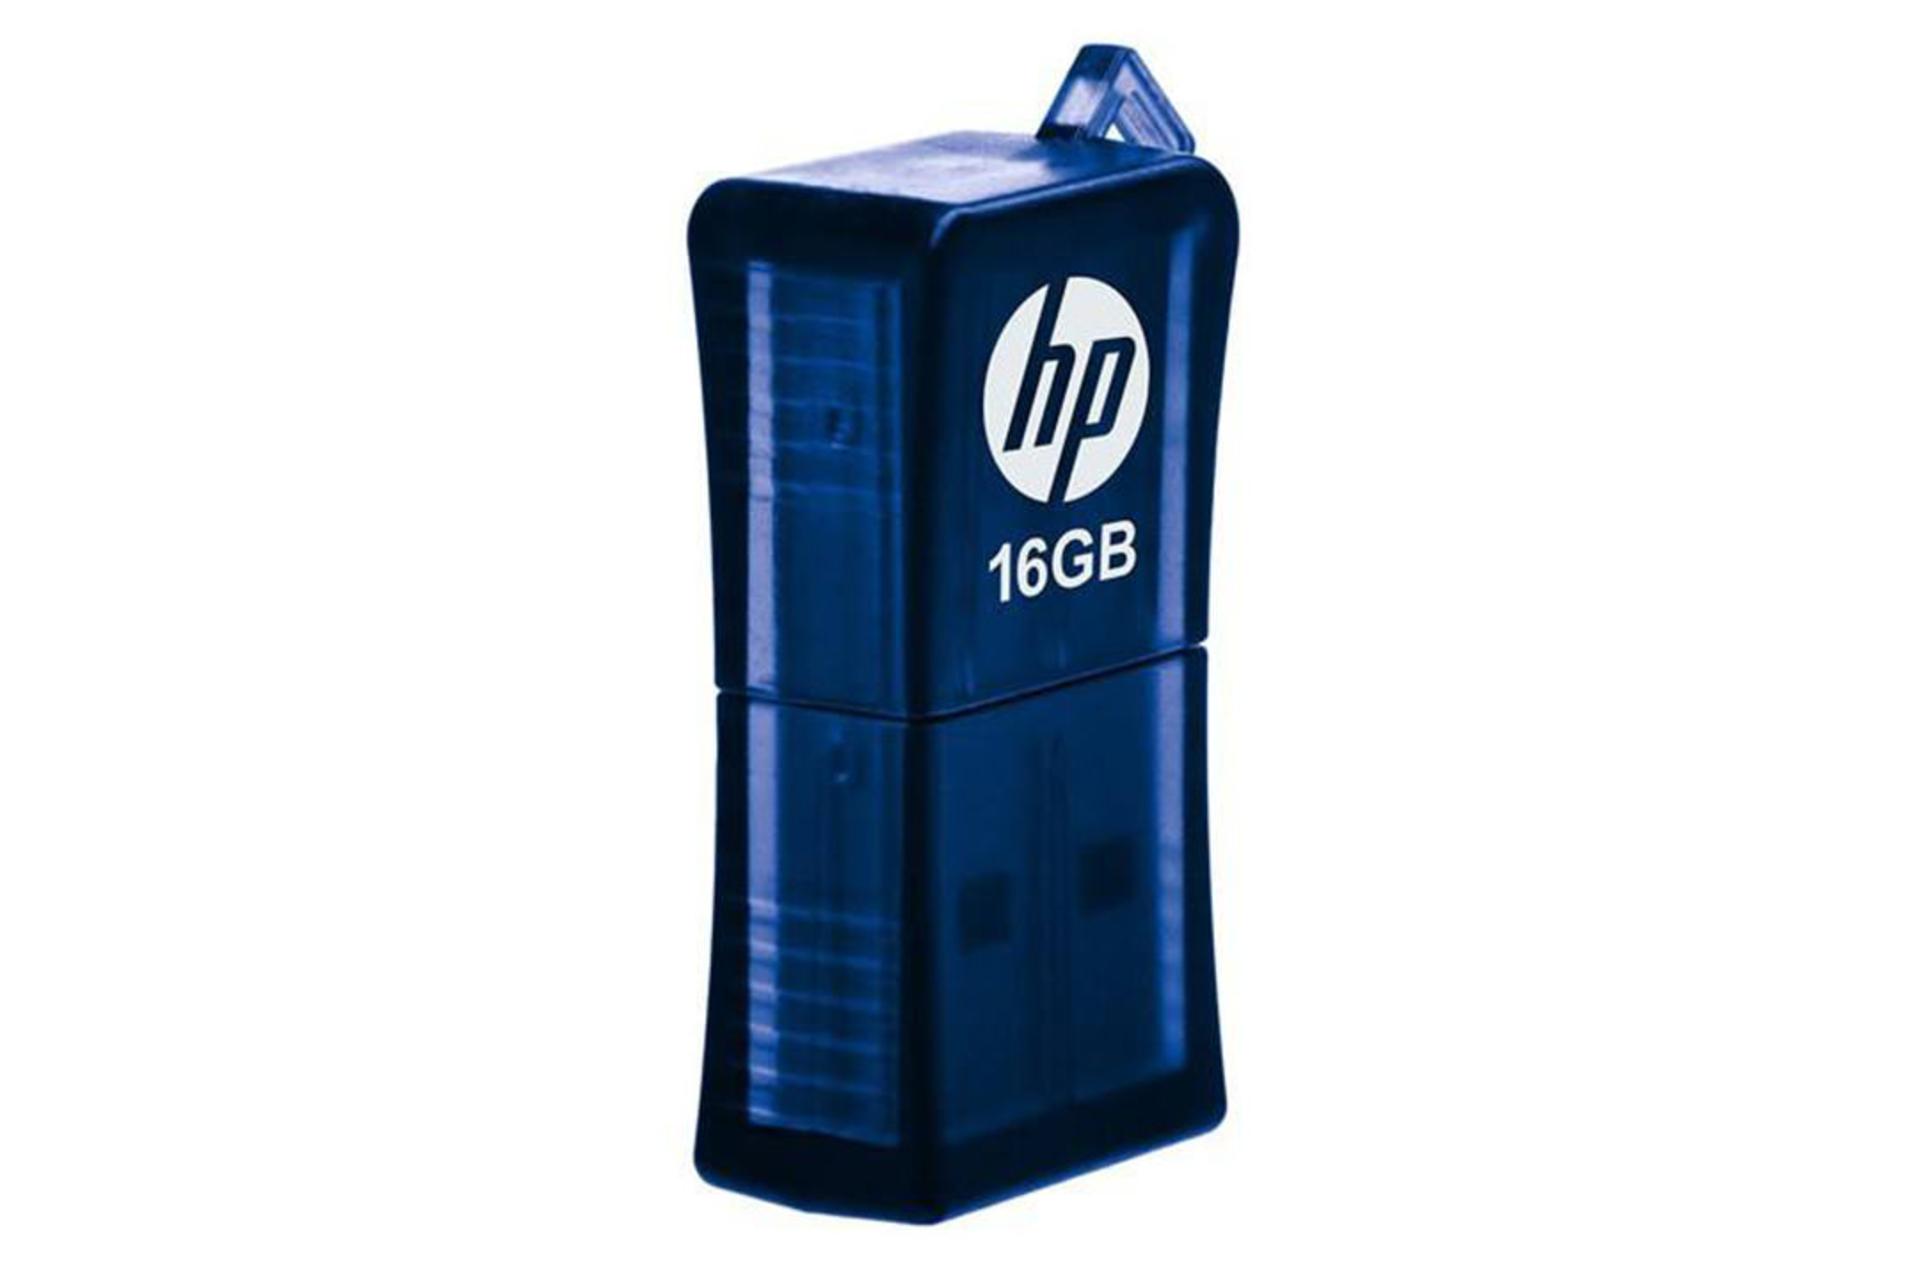 HP v165w 16GB